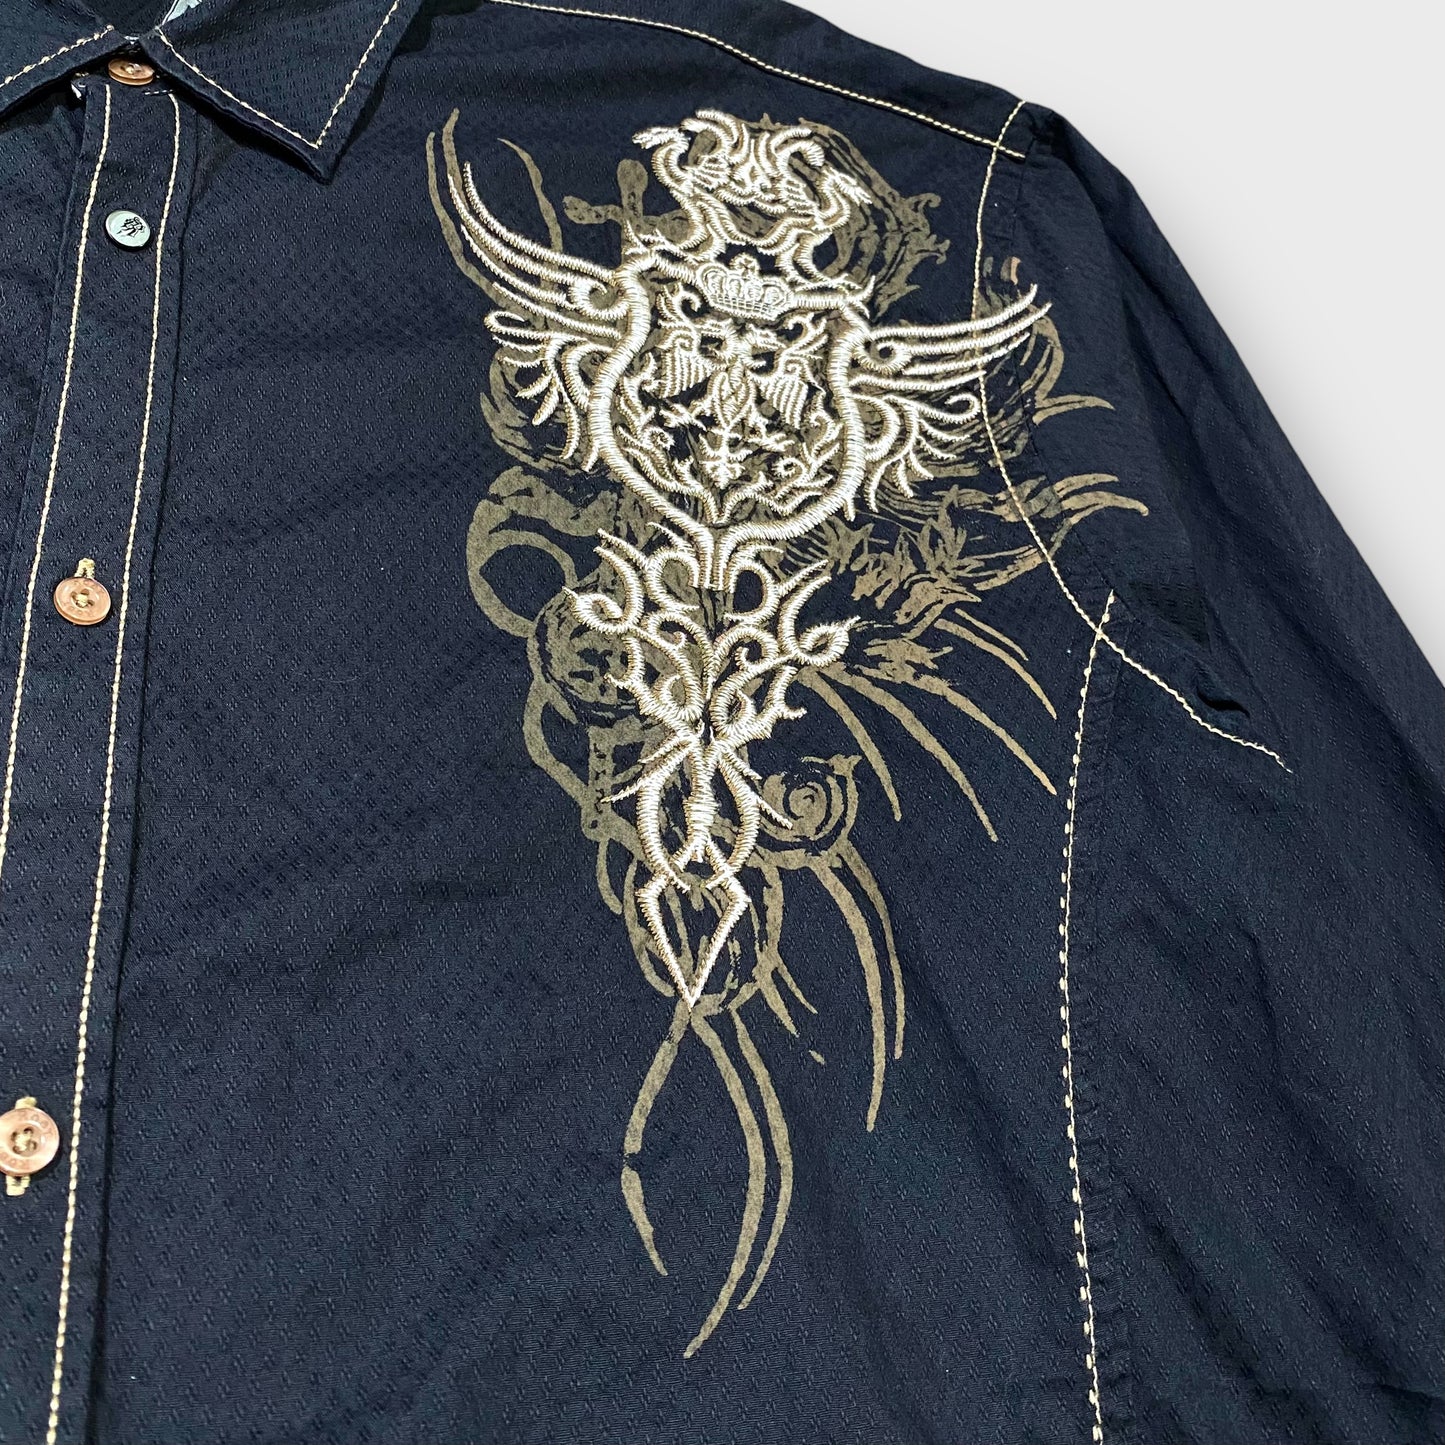 "Roar" Embroidery work shirt